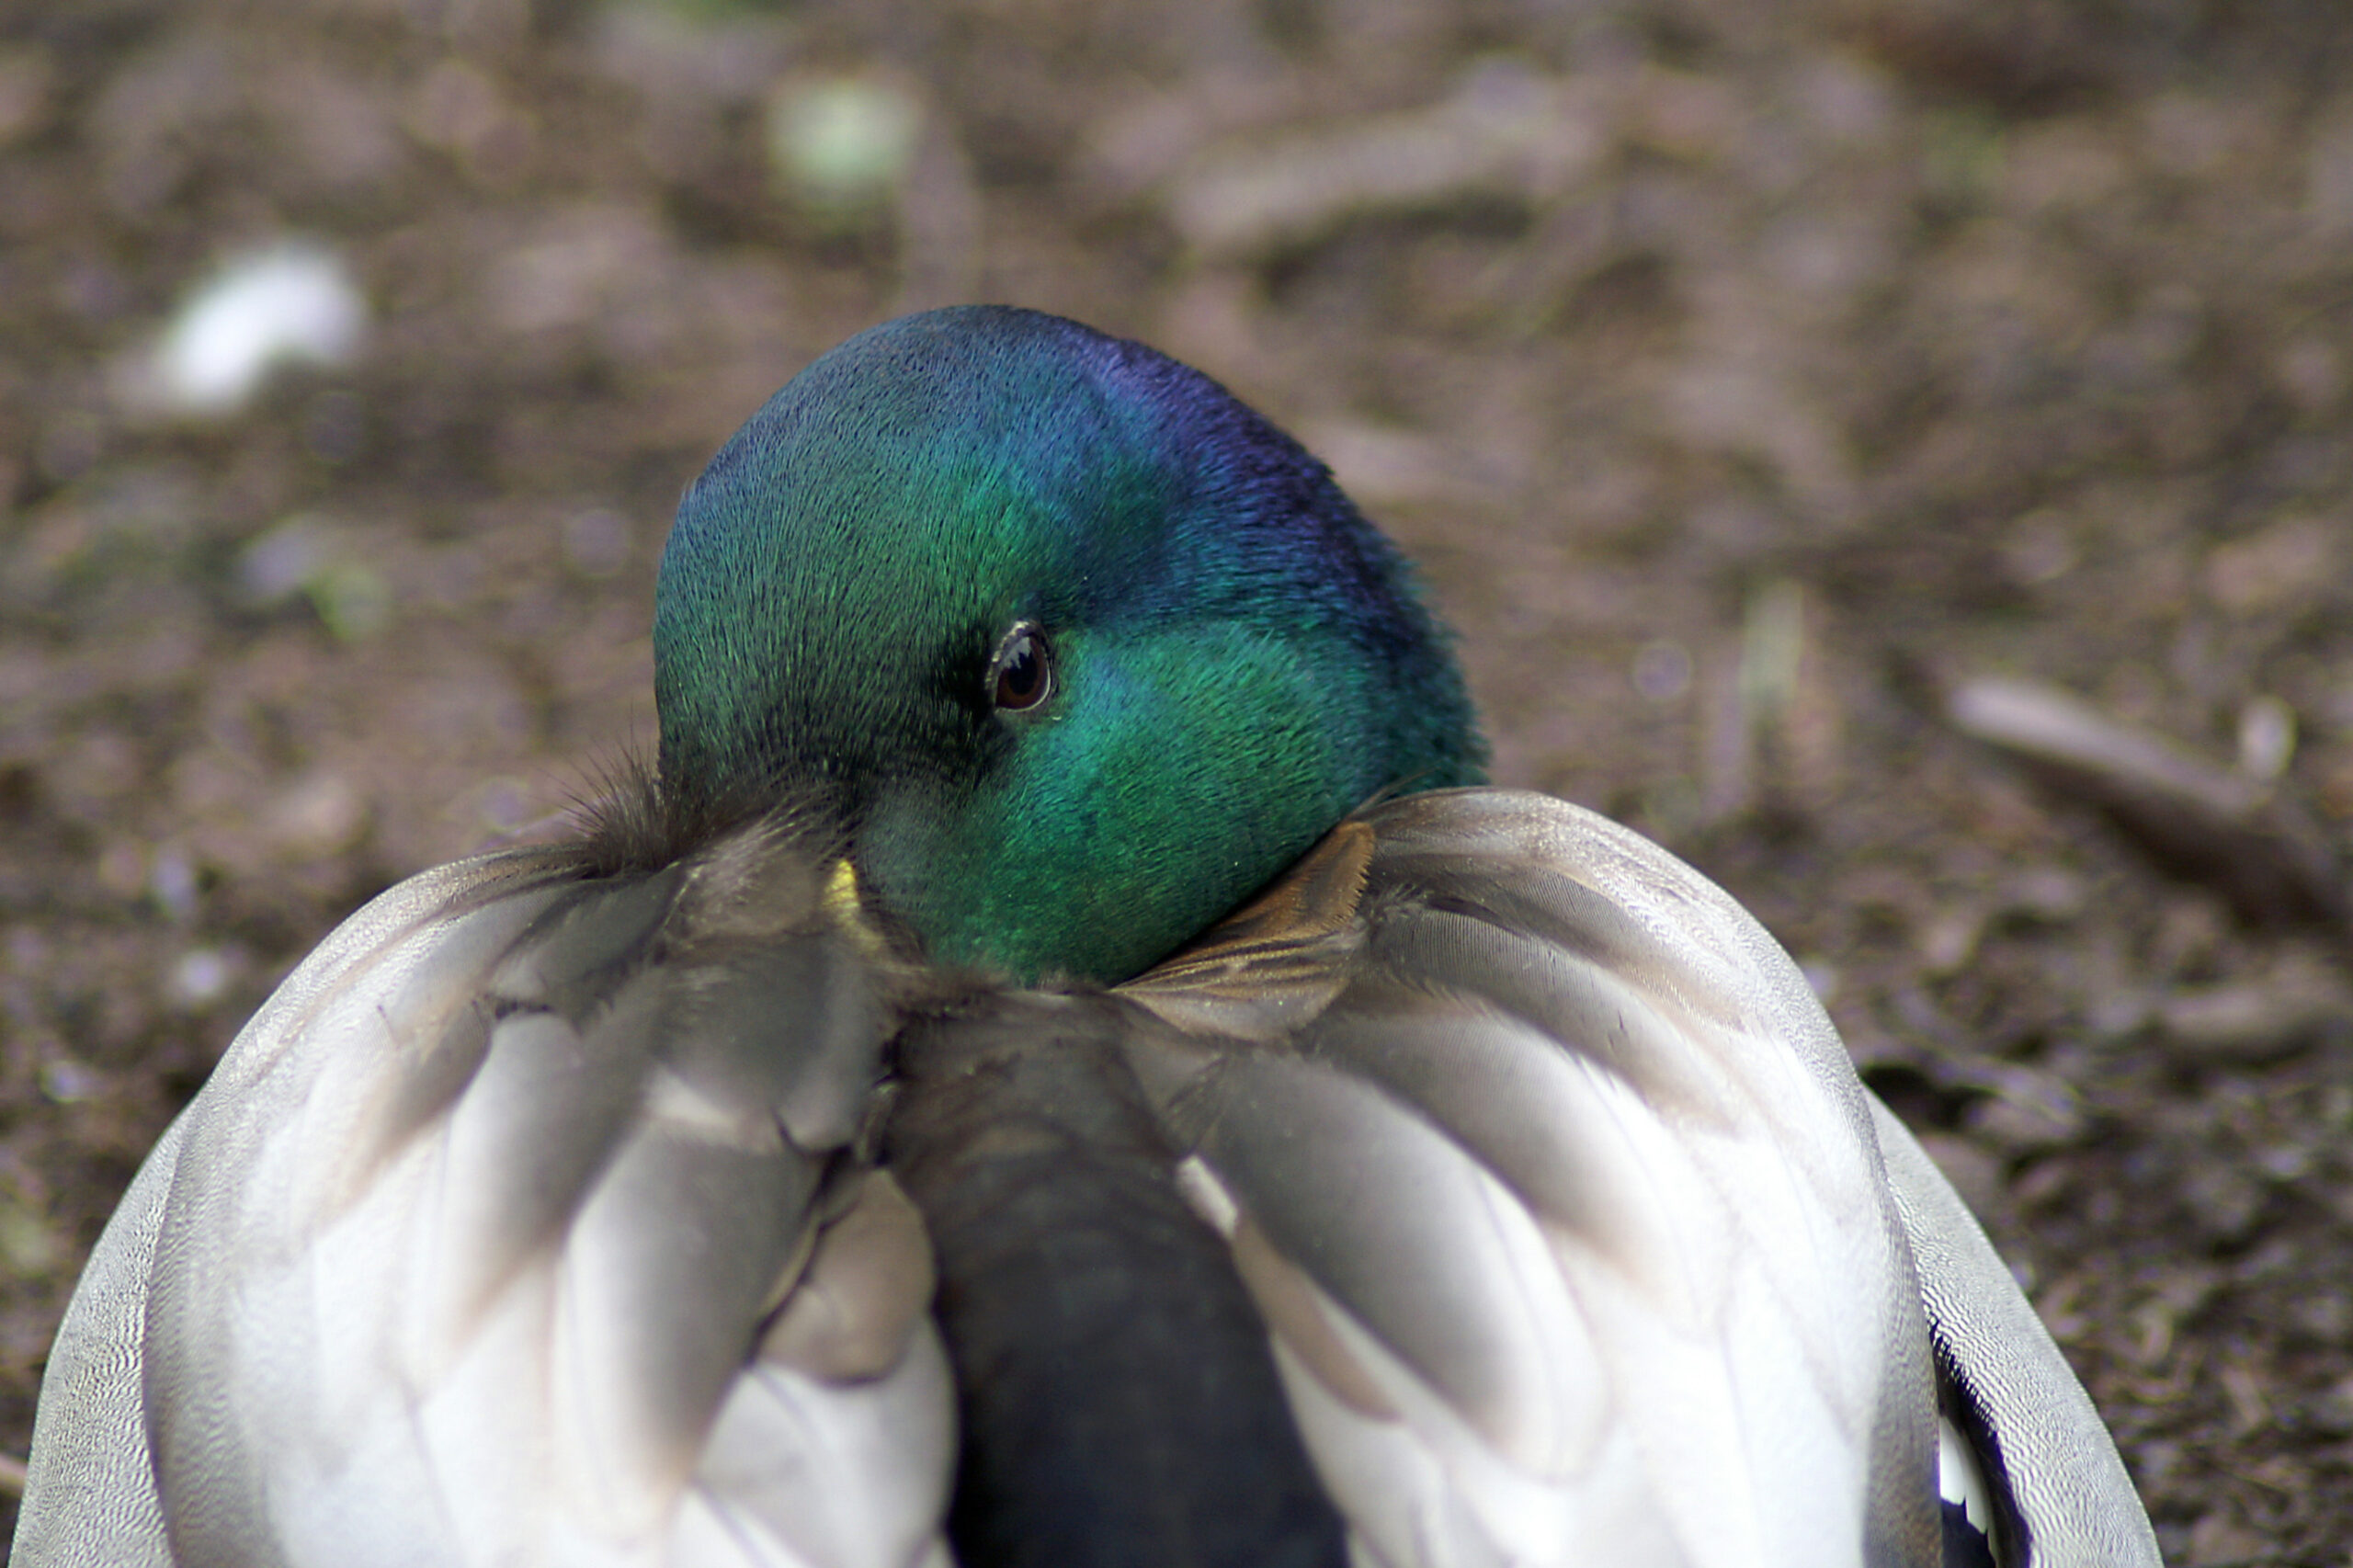 Birds with bigger beaks get colder noses